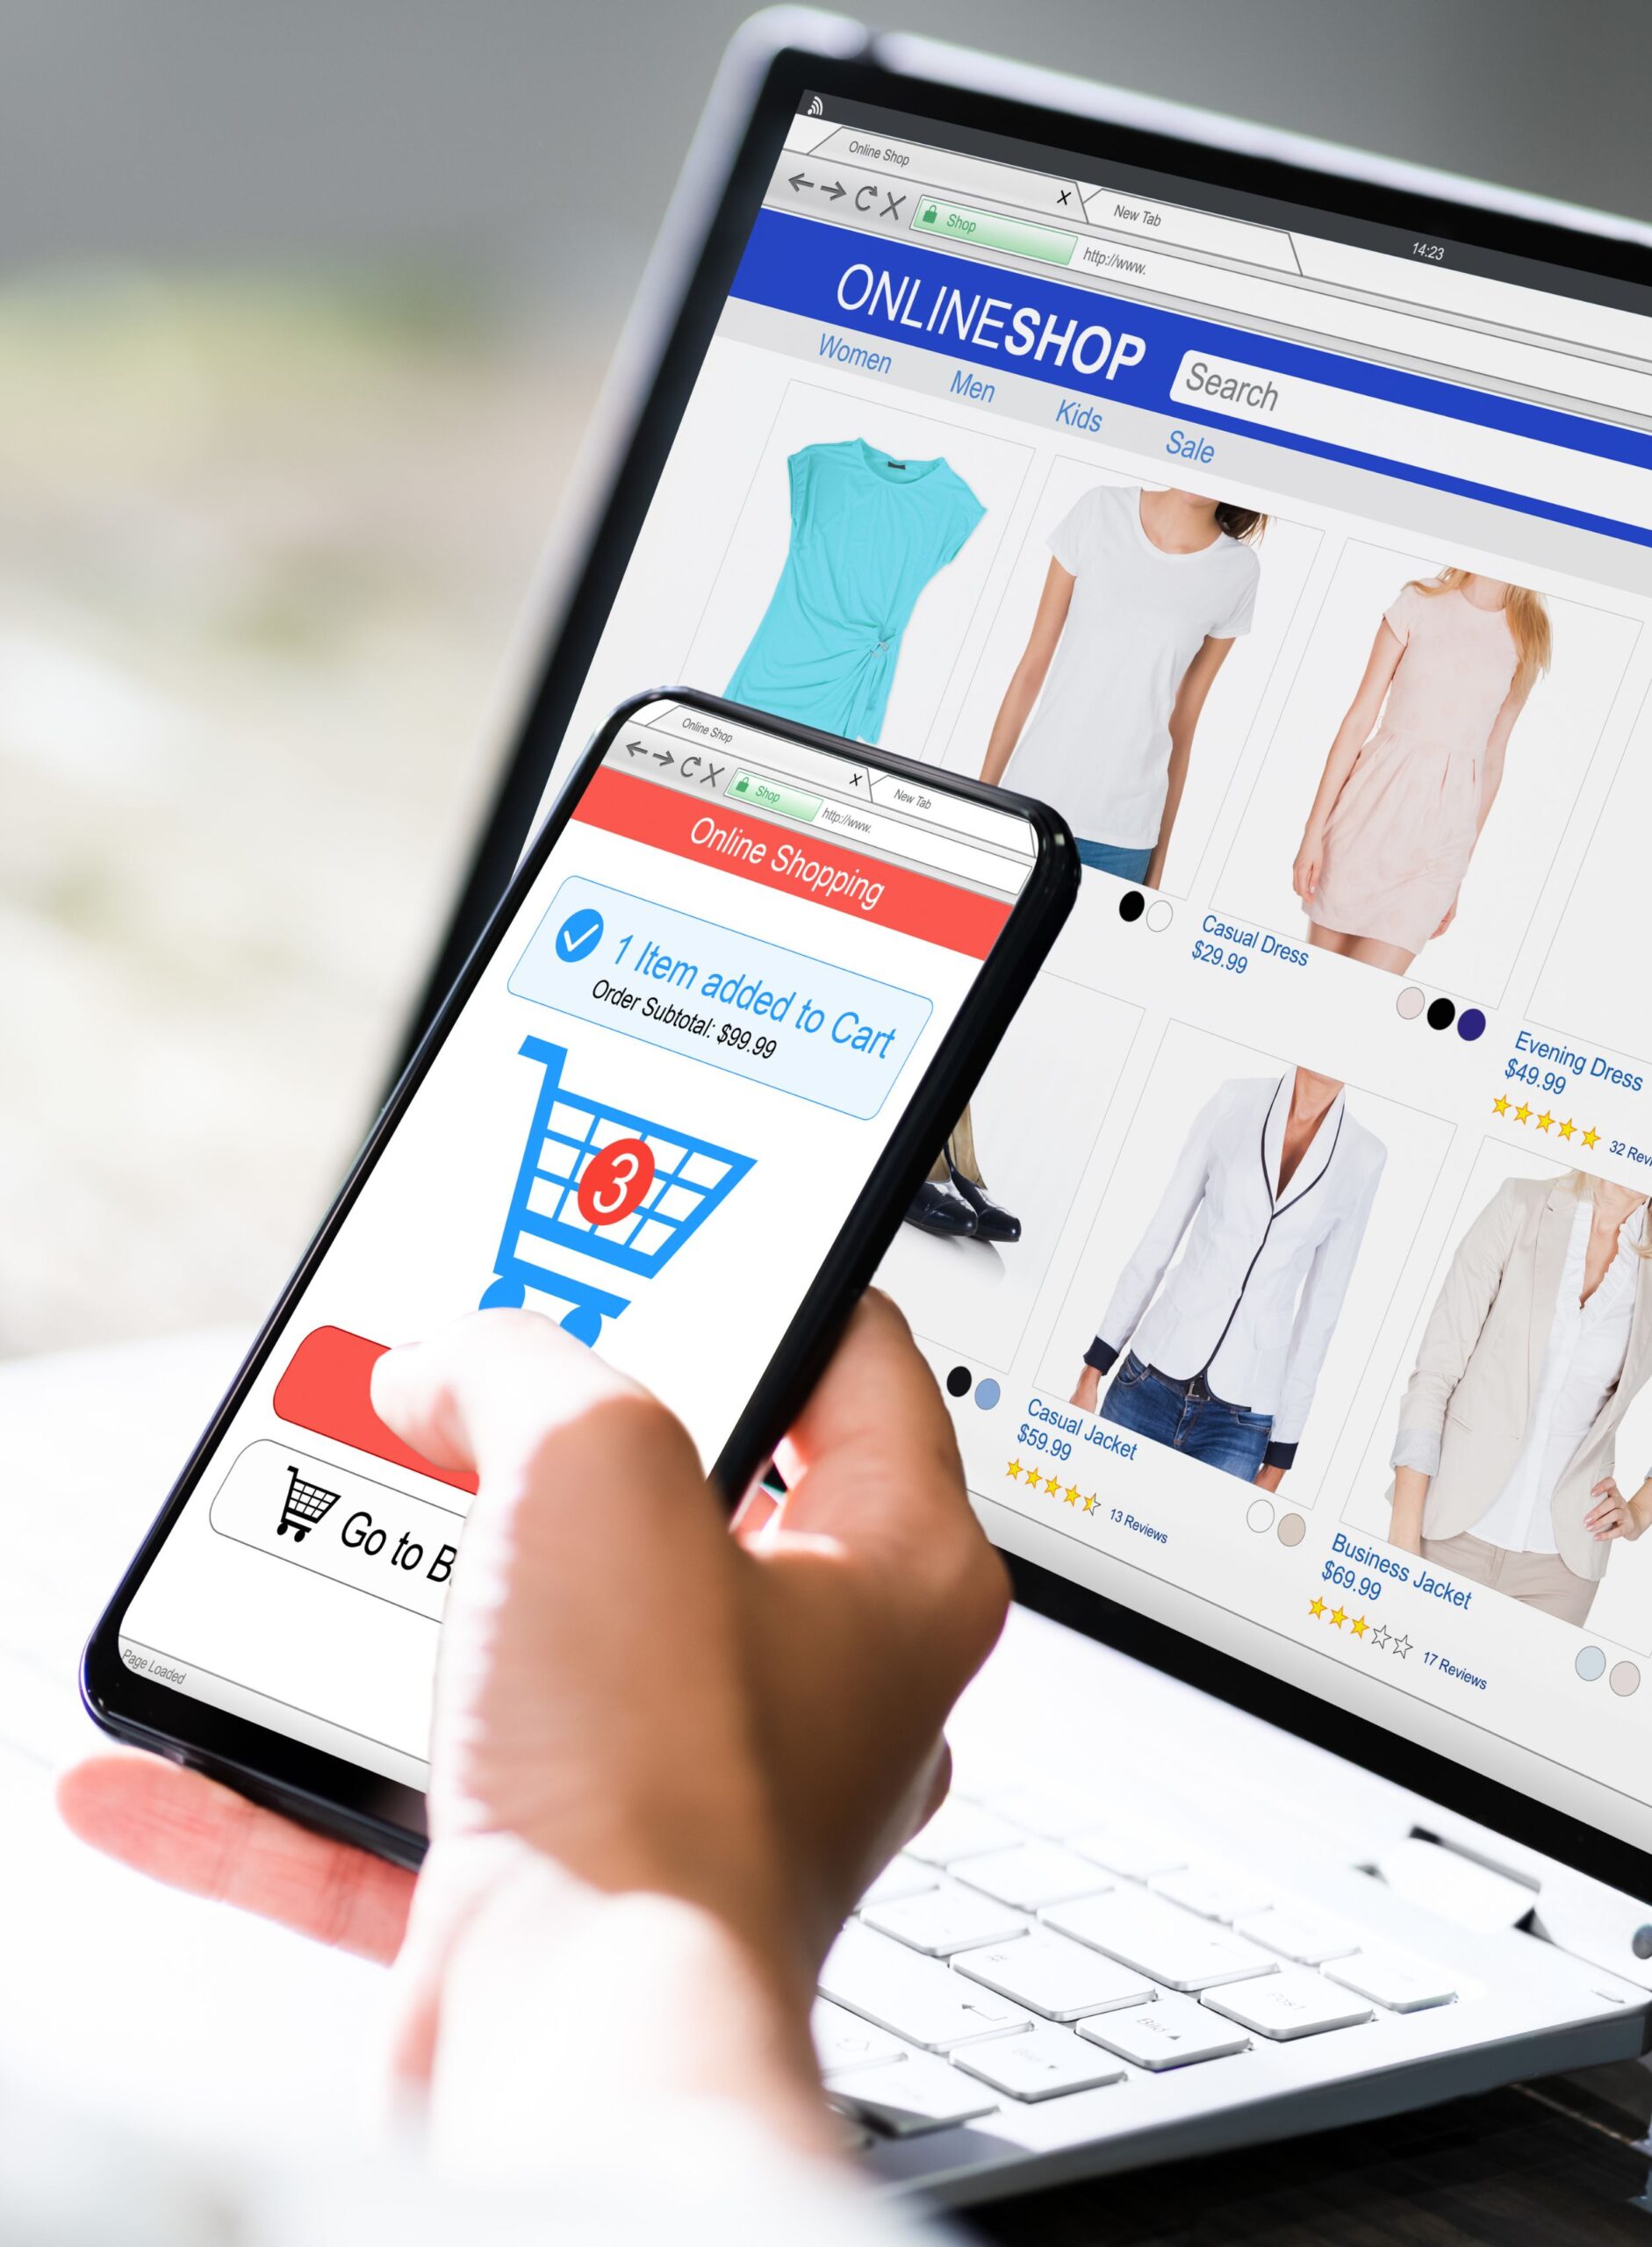 Online shopping cart and parcel on a digital ecommerce platform background.